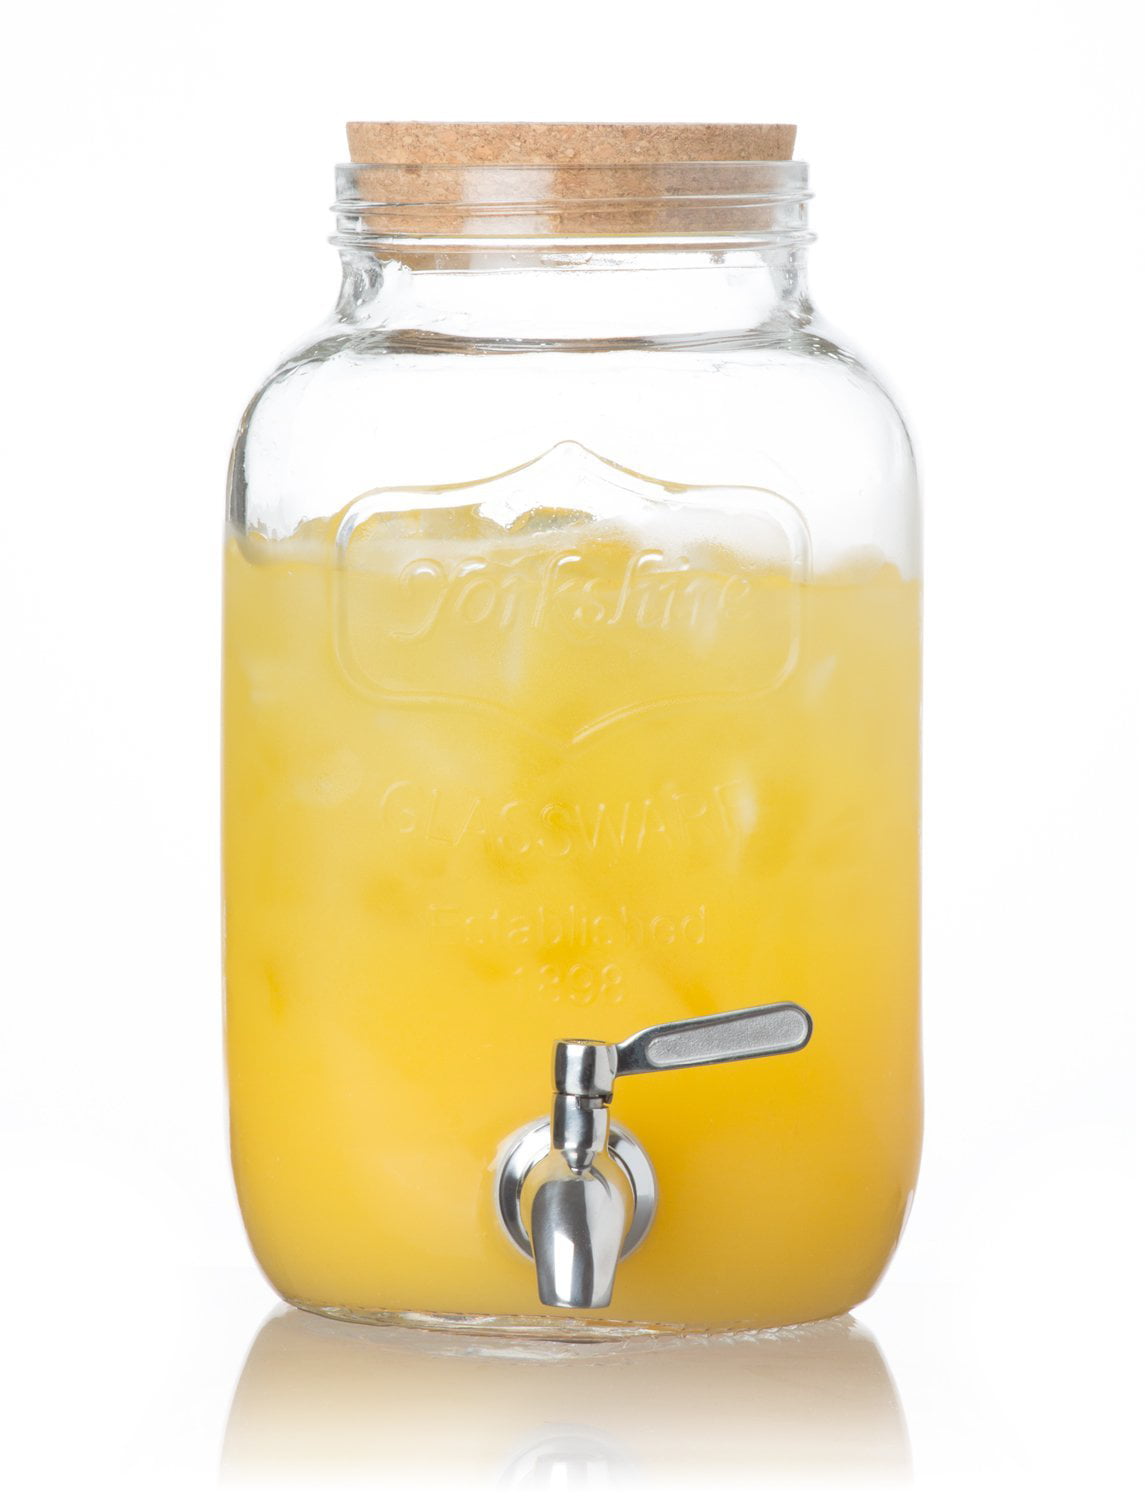 Details about   Lemonade Jar Glass Beverage Dispenser w/ Lid and Spout Spigot 3 Liter 0.8 Gal 